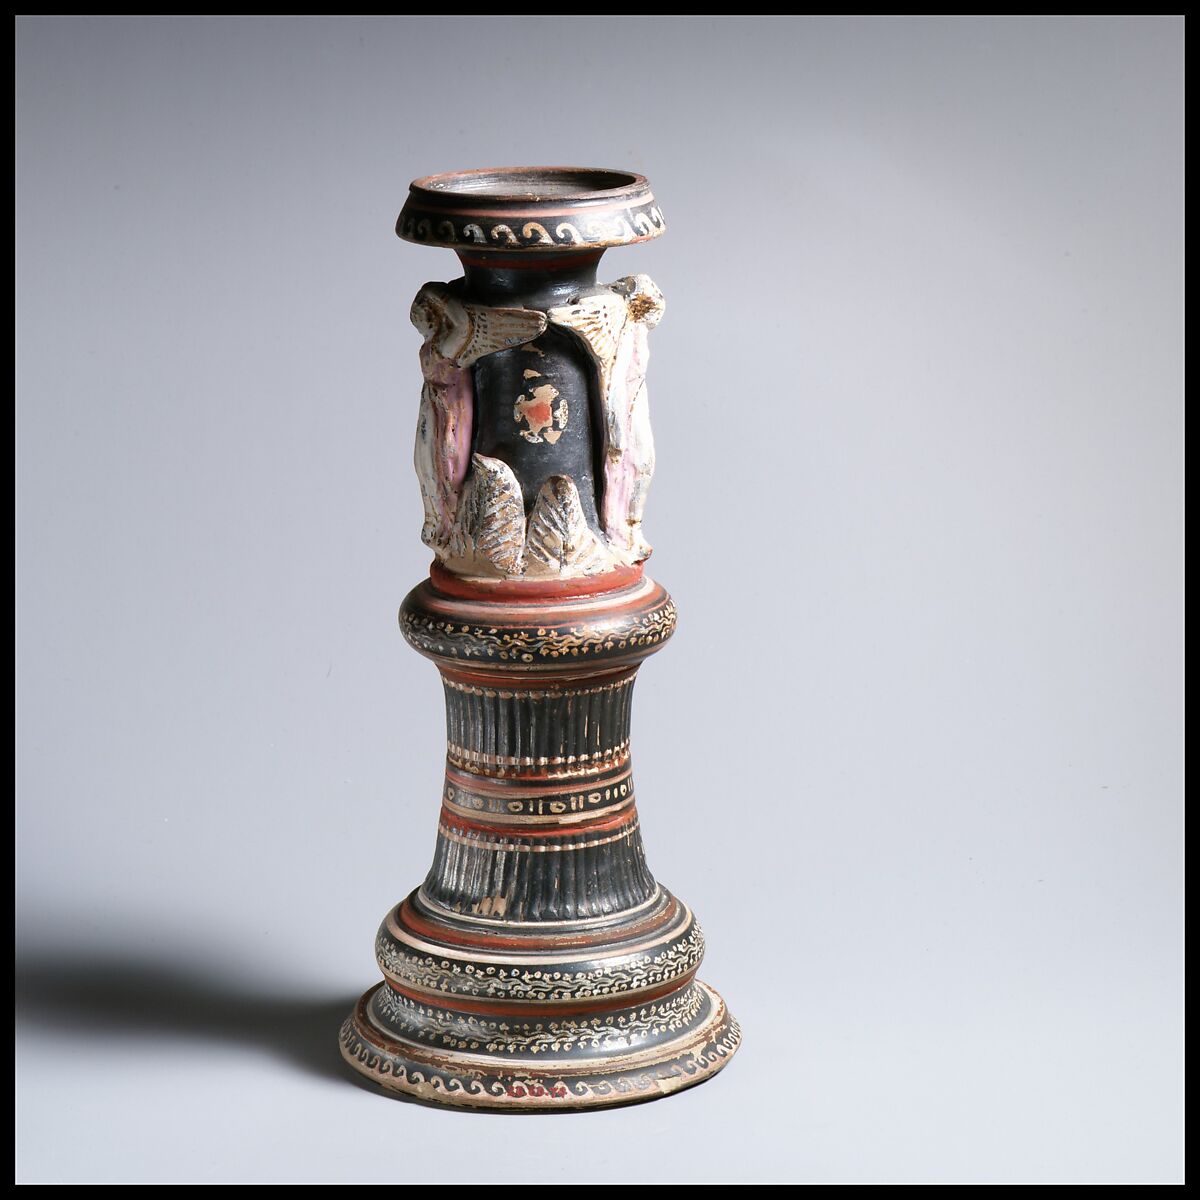 Terracotta thymiaterion (incense burner), Terracotta, Greek, South Italian, Apulian, Gnathian 